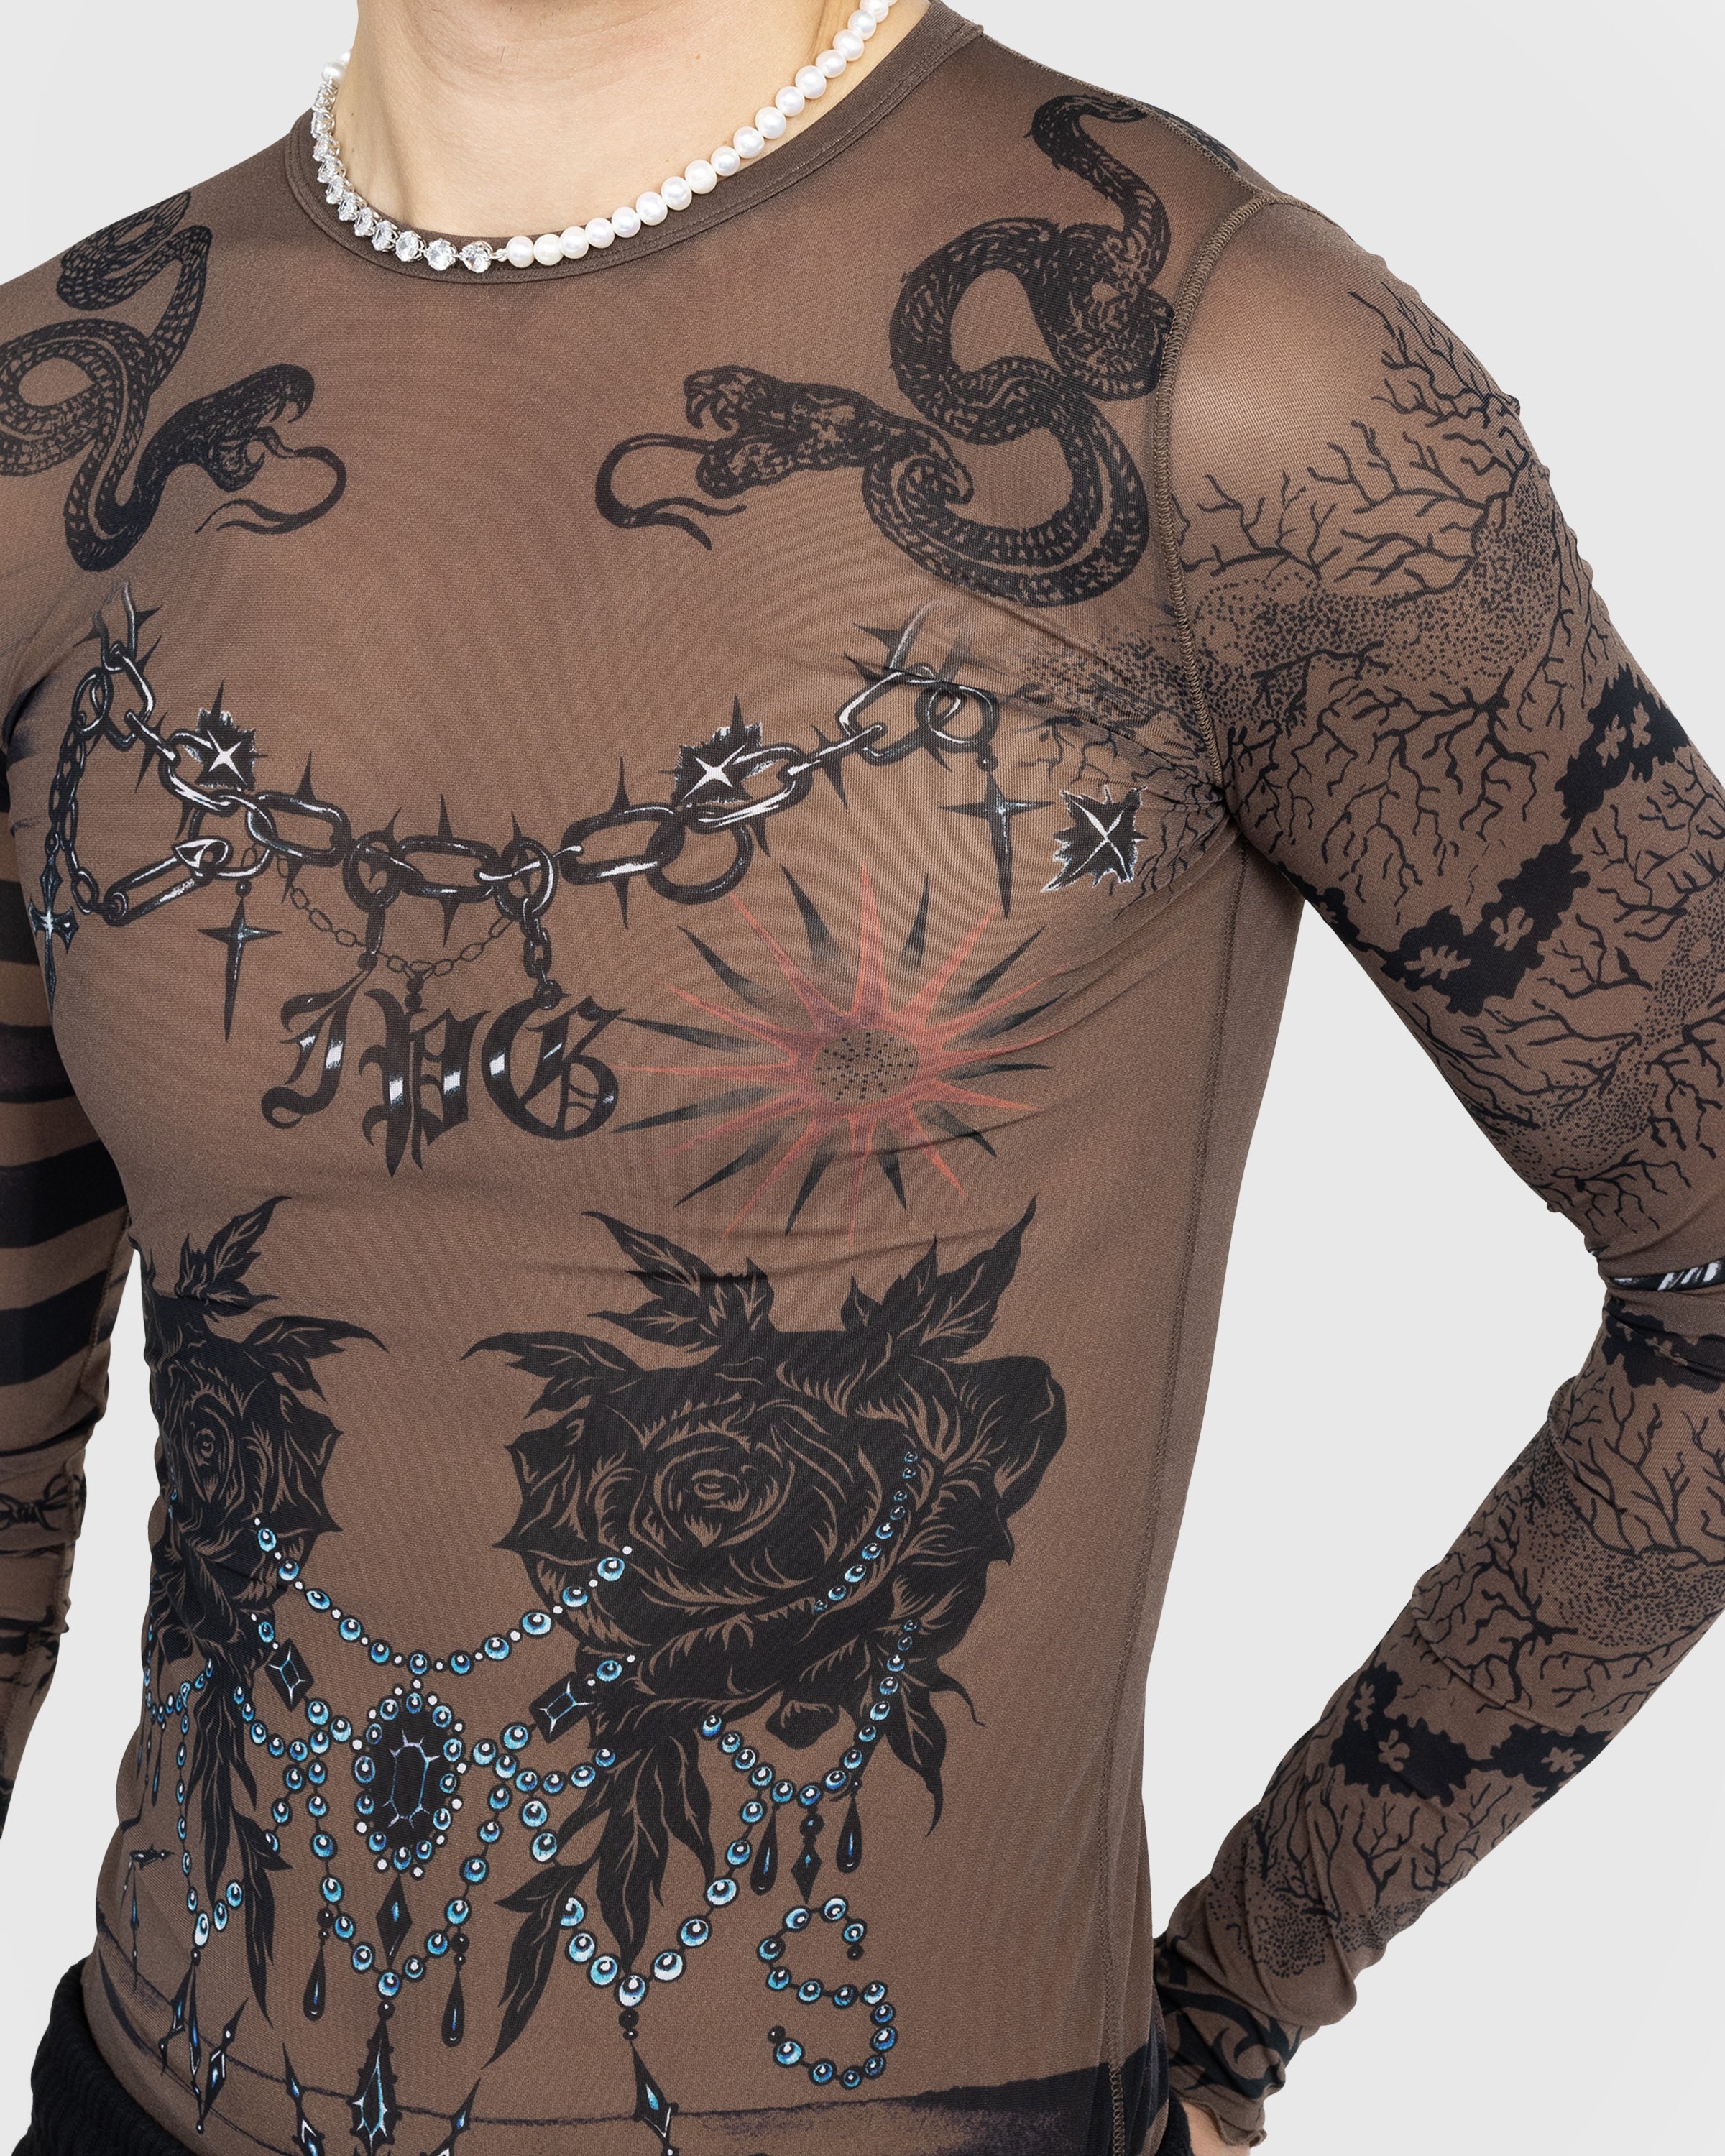 Jean Paul Gaultier - Trompe l'oeil Tattoo Longsleeve Top Ebene/Grey/Black - Clothing - Brown - Image 4